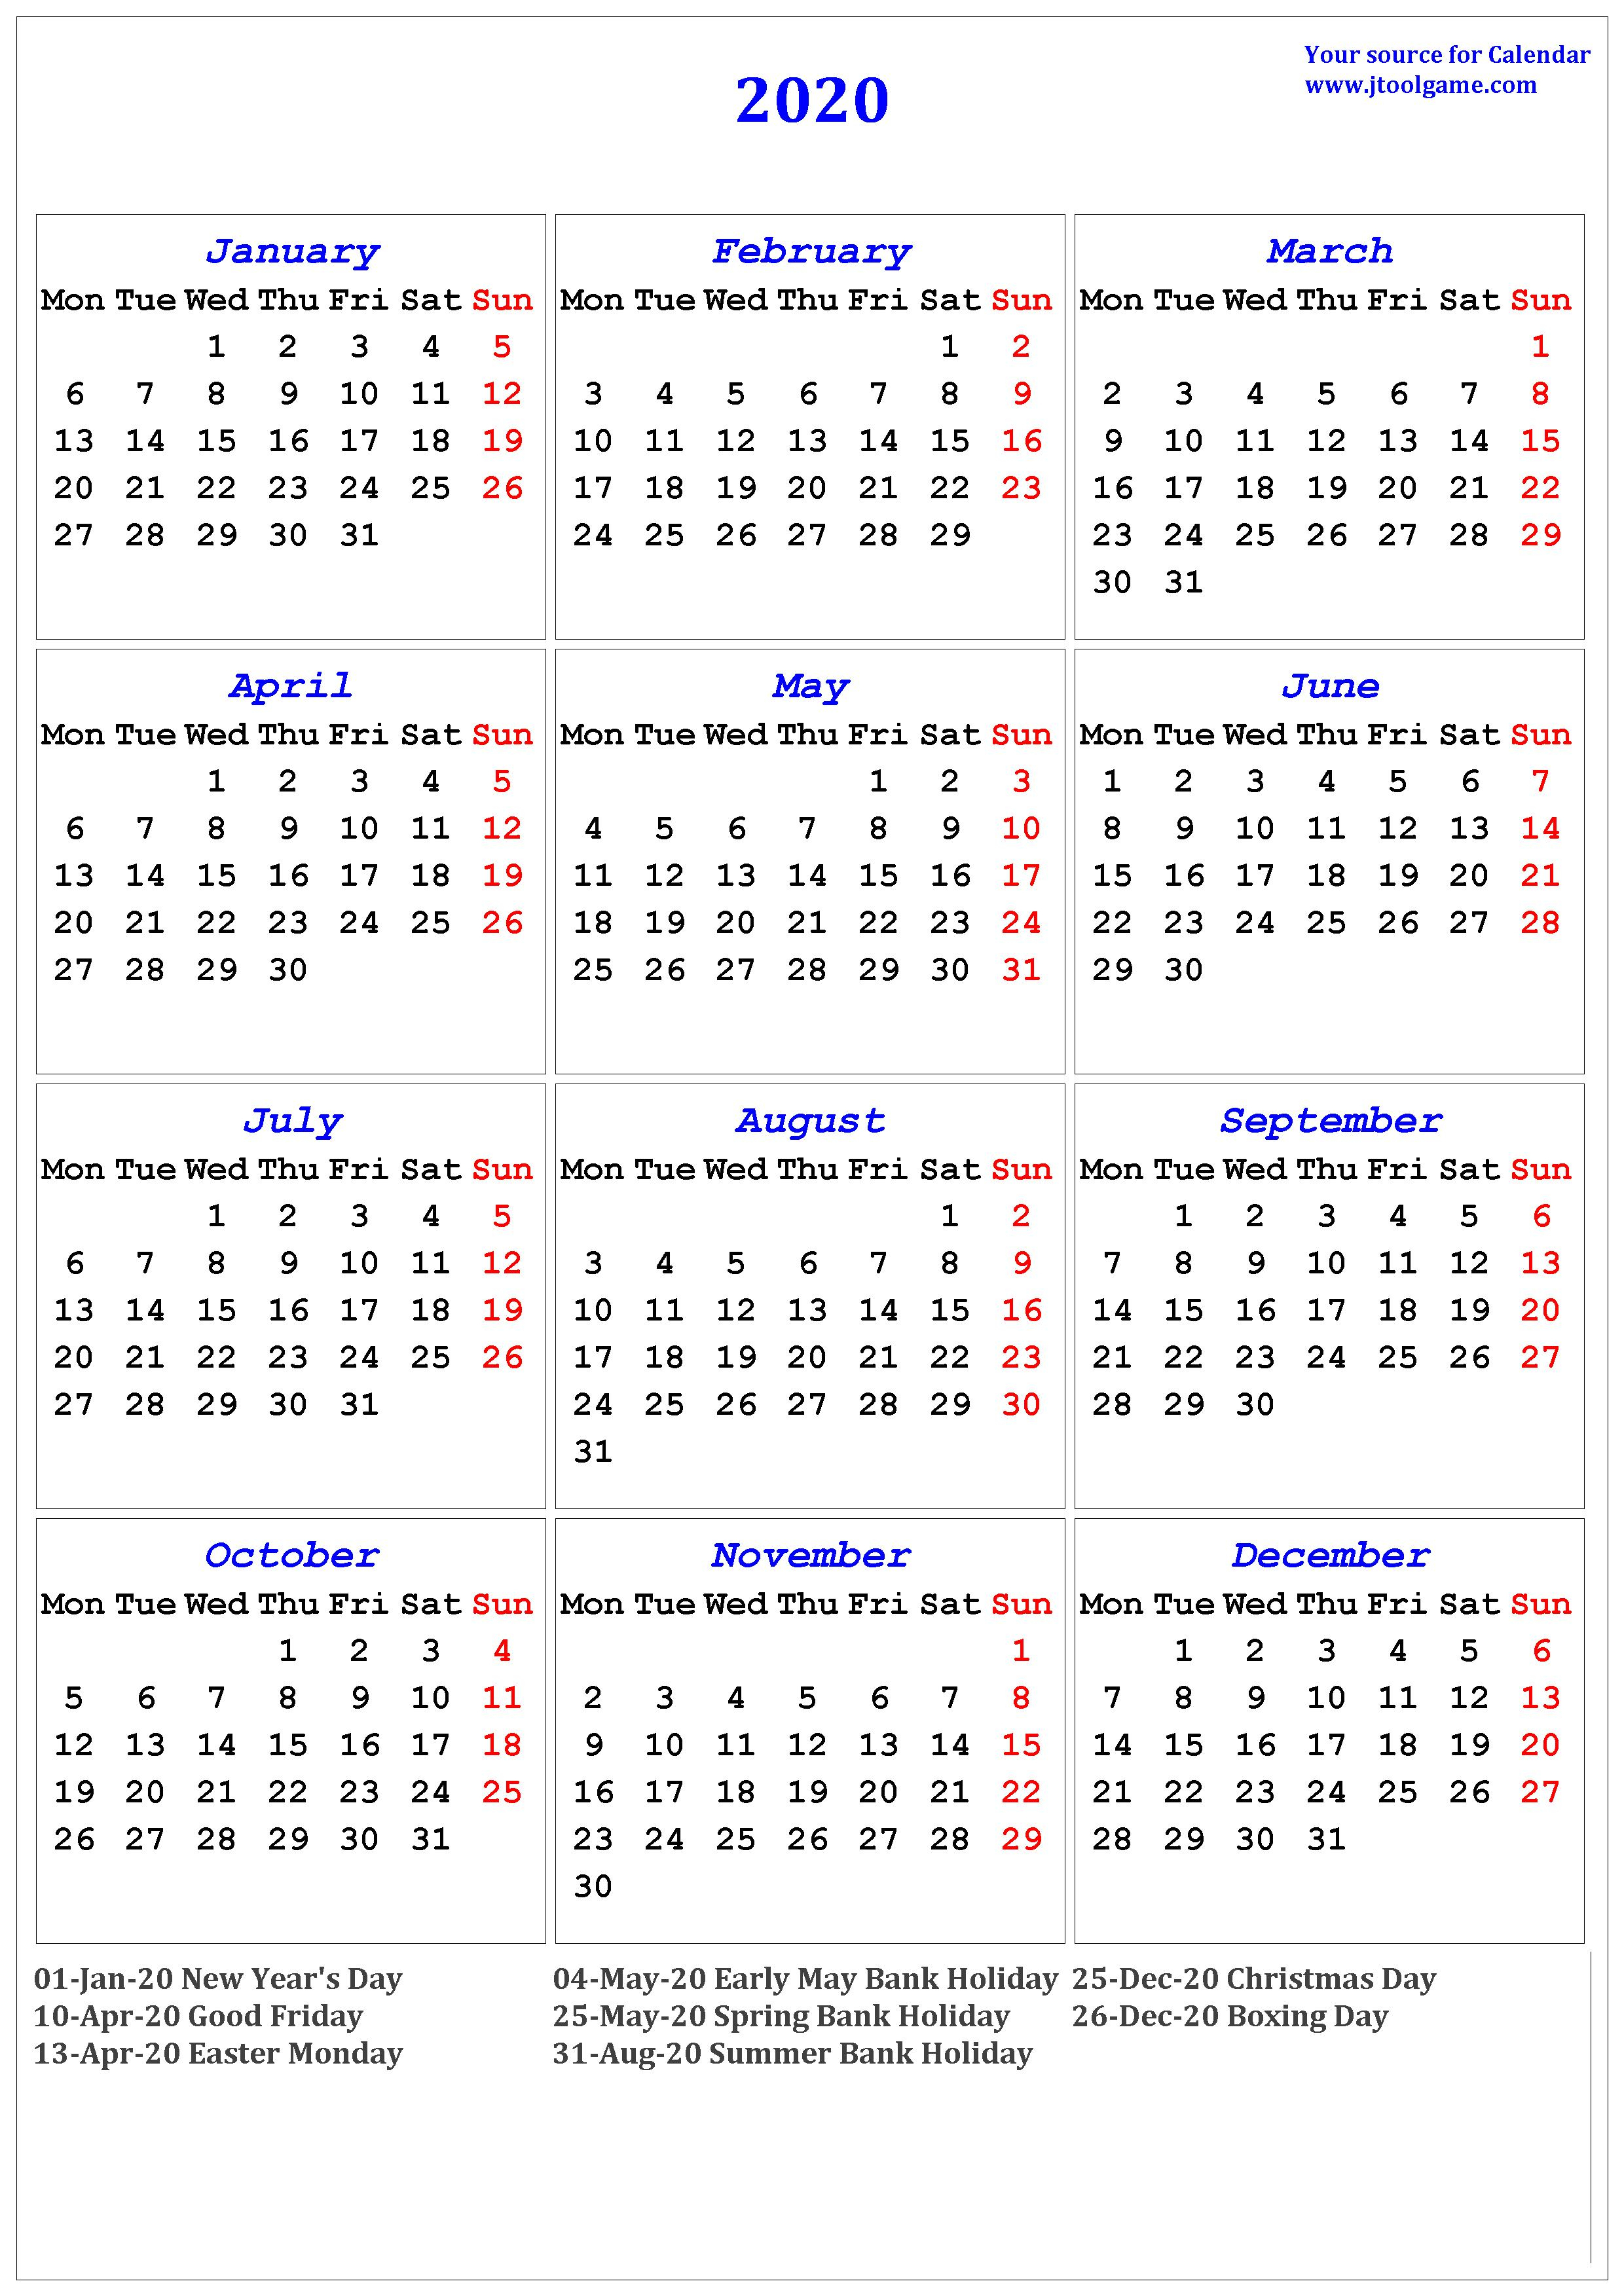 2020 Calendar Canada Printable With Holidays | Calendar